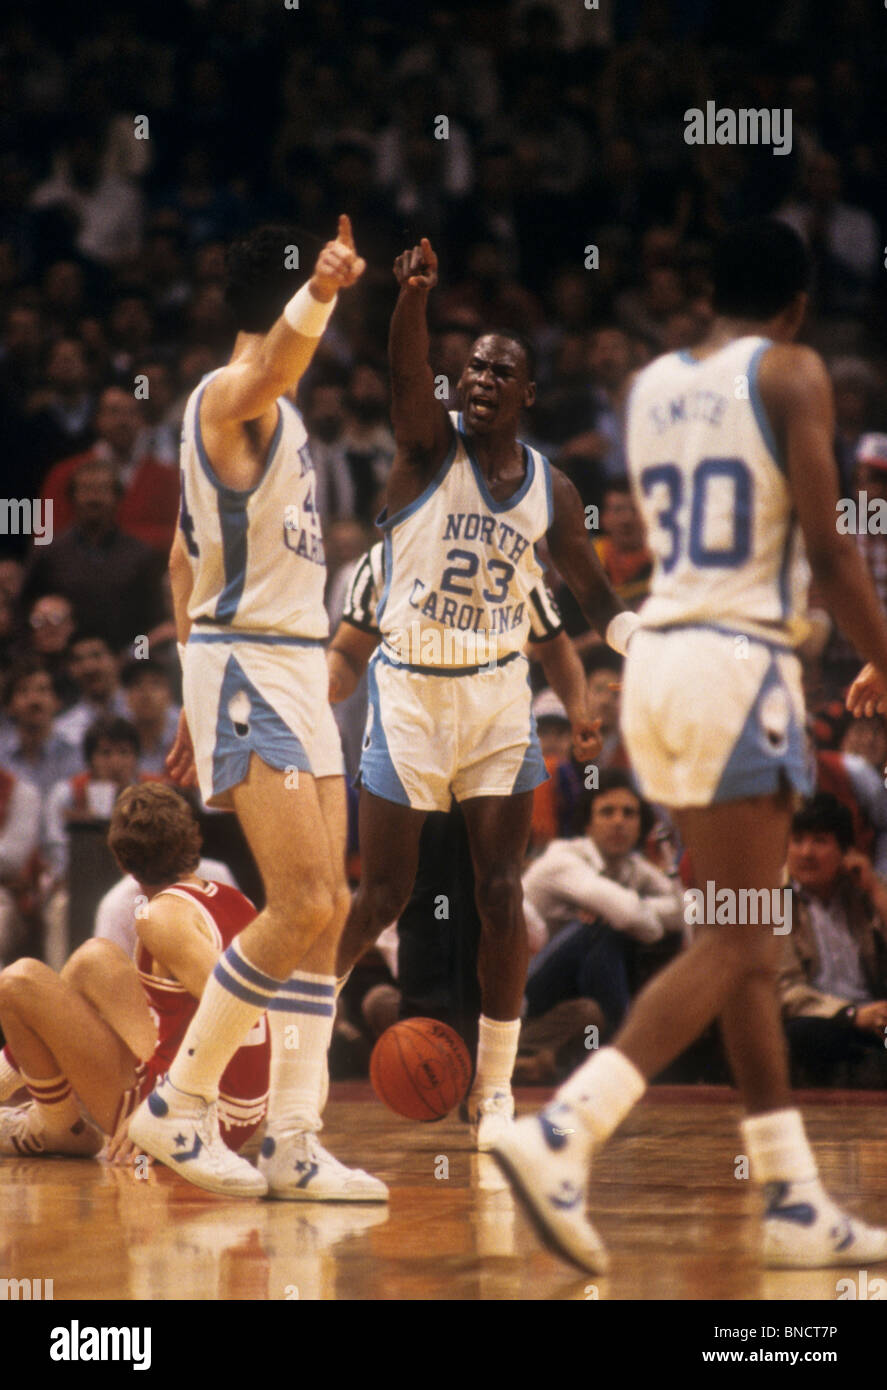 Michael Jordan playing for North Carolina in 1984. Stock Photo